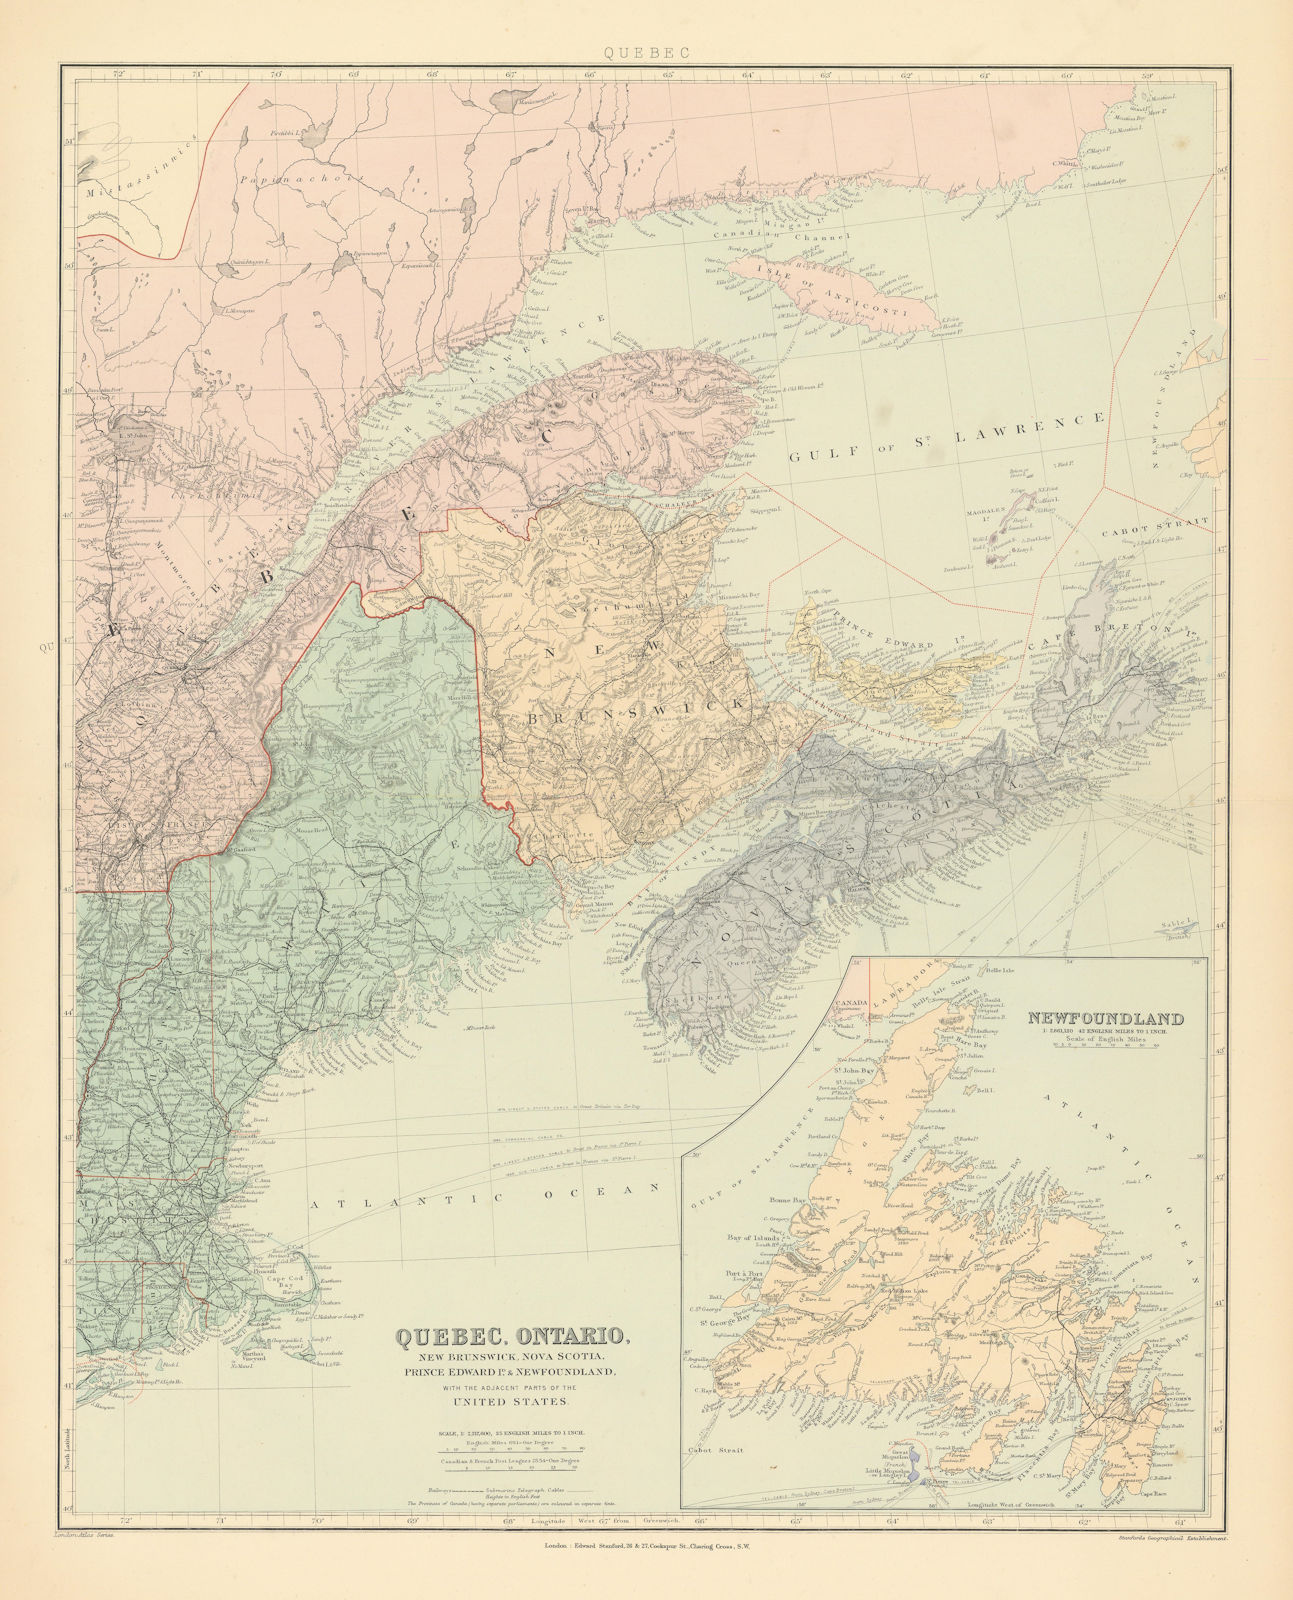 Canada Maritime Provinces. Quebec New Brunswick Maine PEI. STANFORD 1894 map